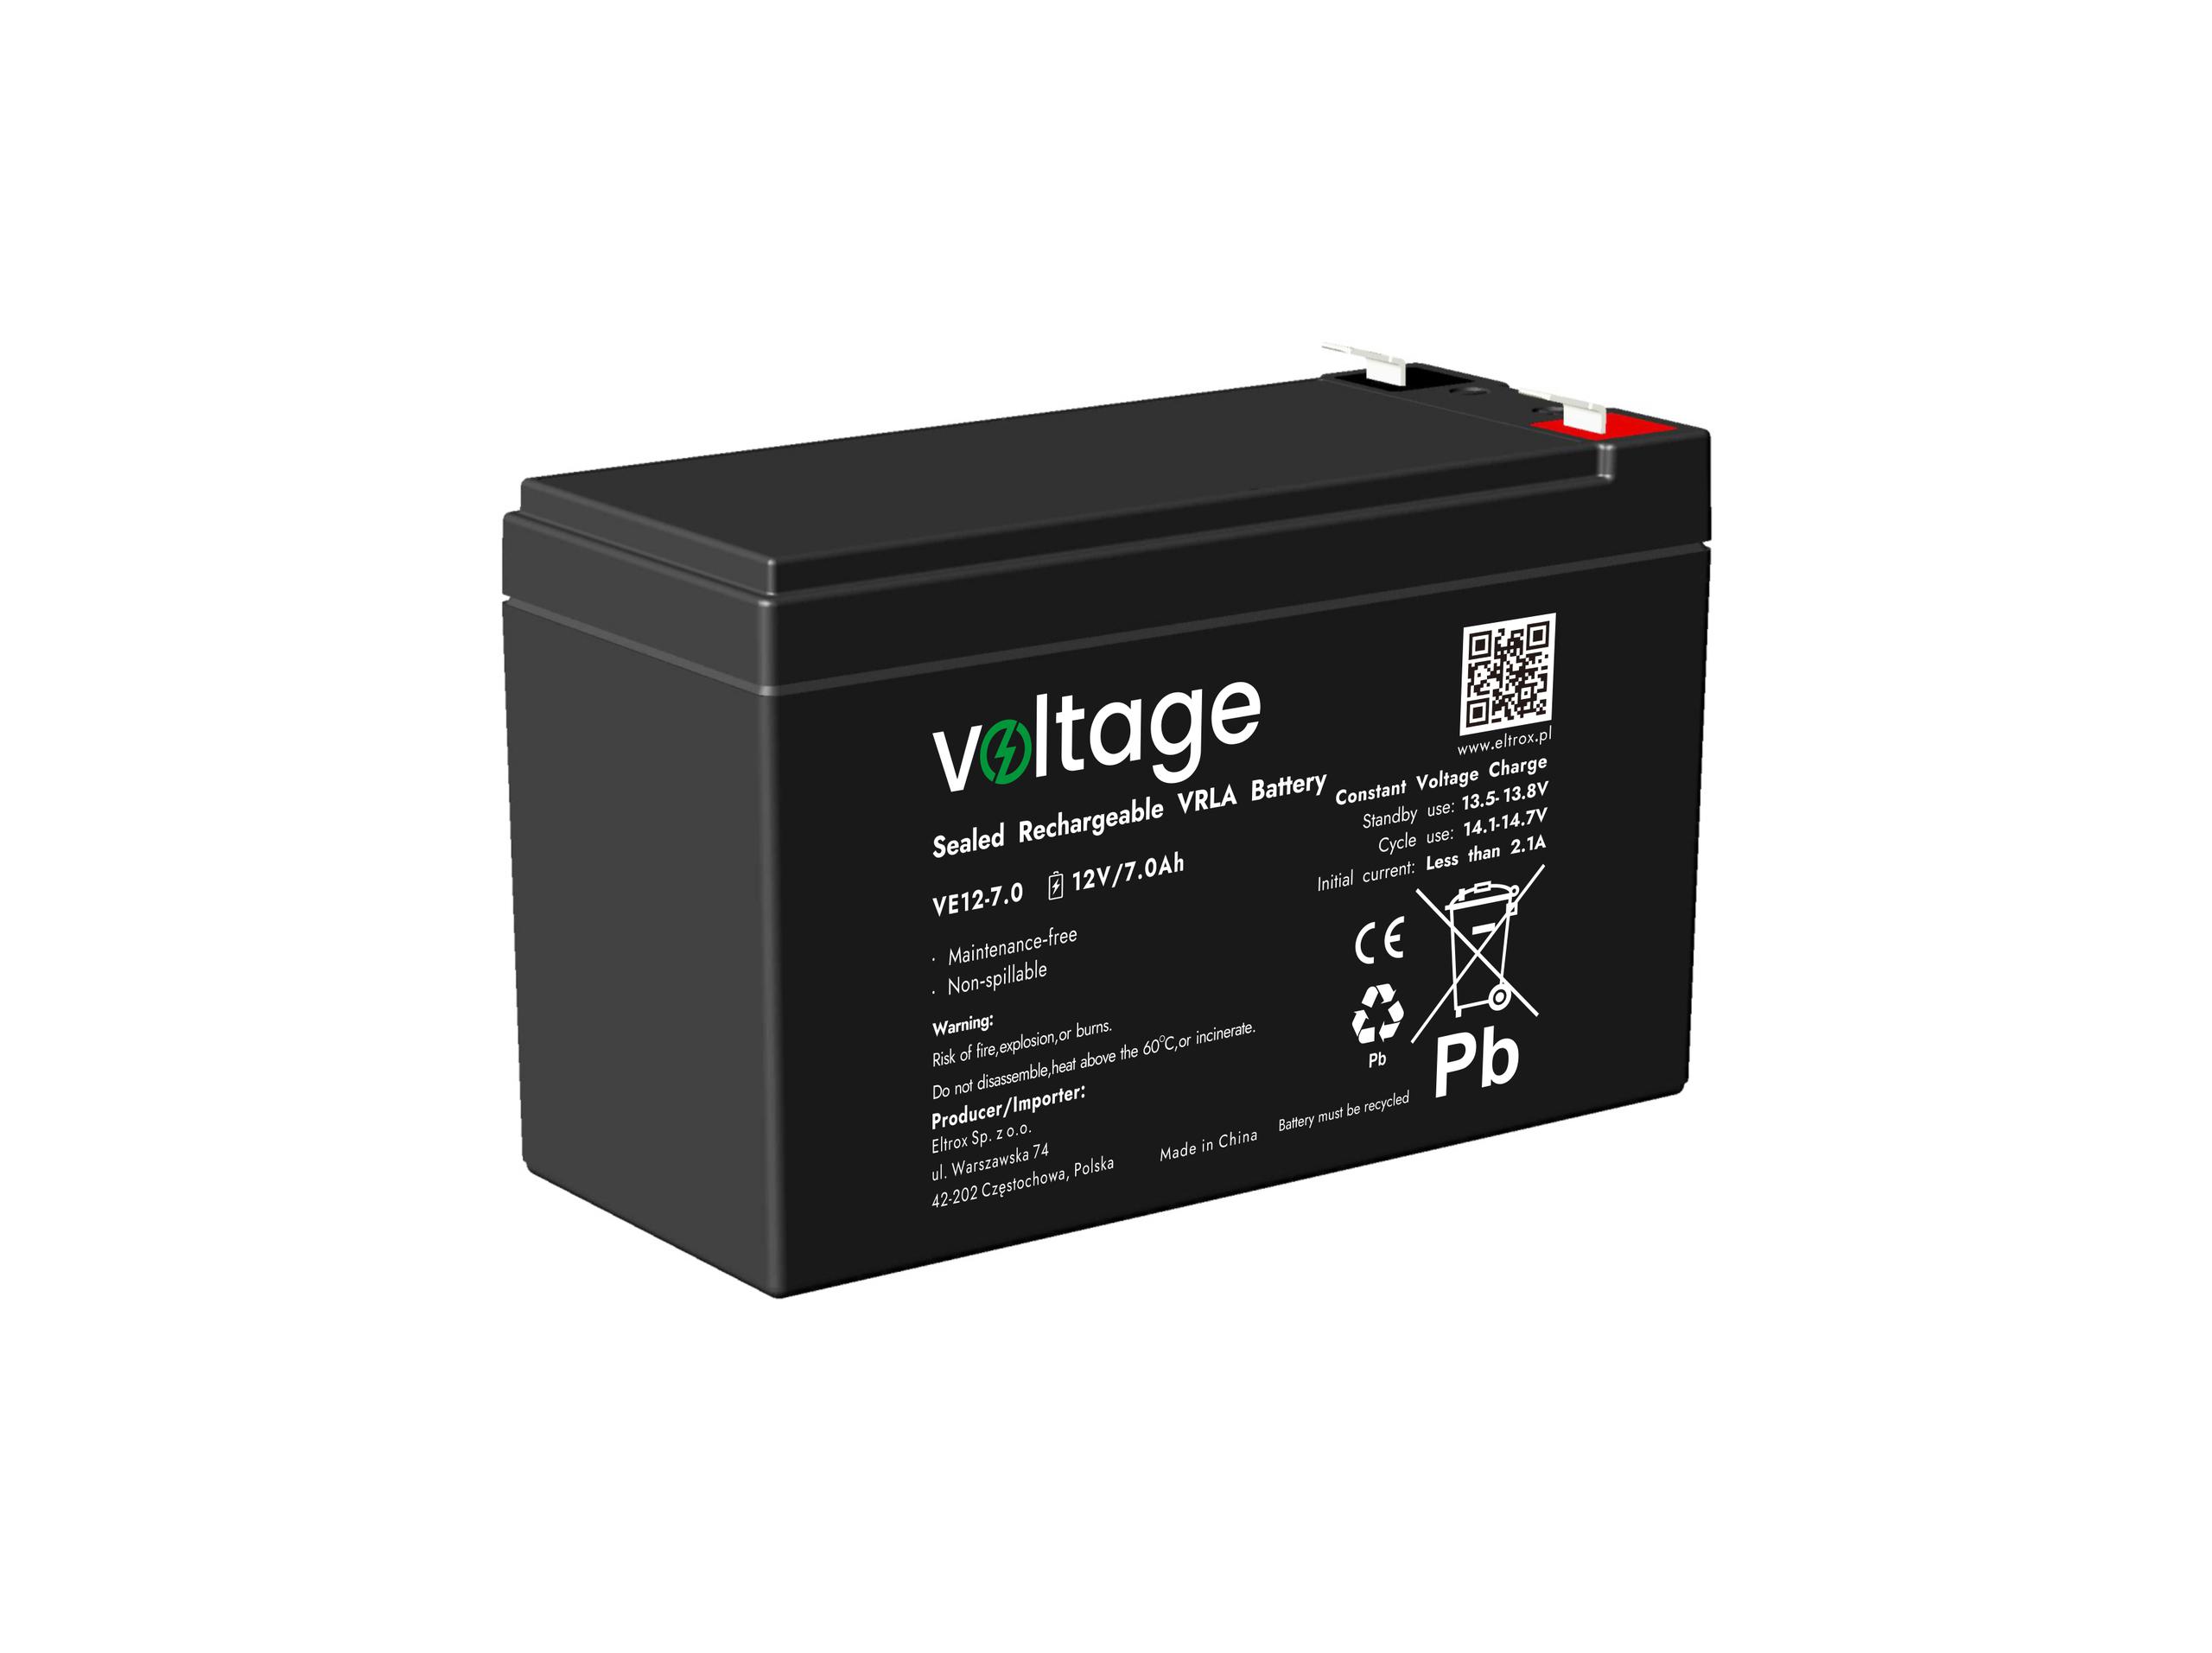 Akumulator AGM Voltage 12V 7.0Ah VE12-7.0 - najważniejsze cechy: